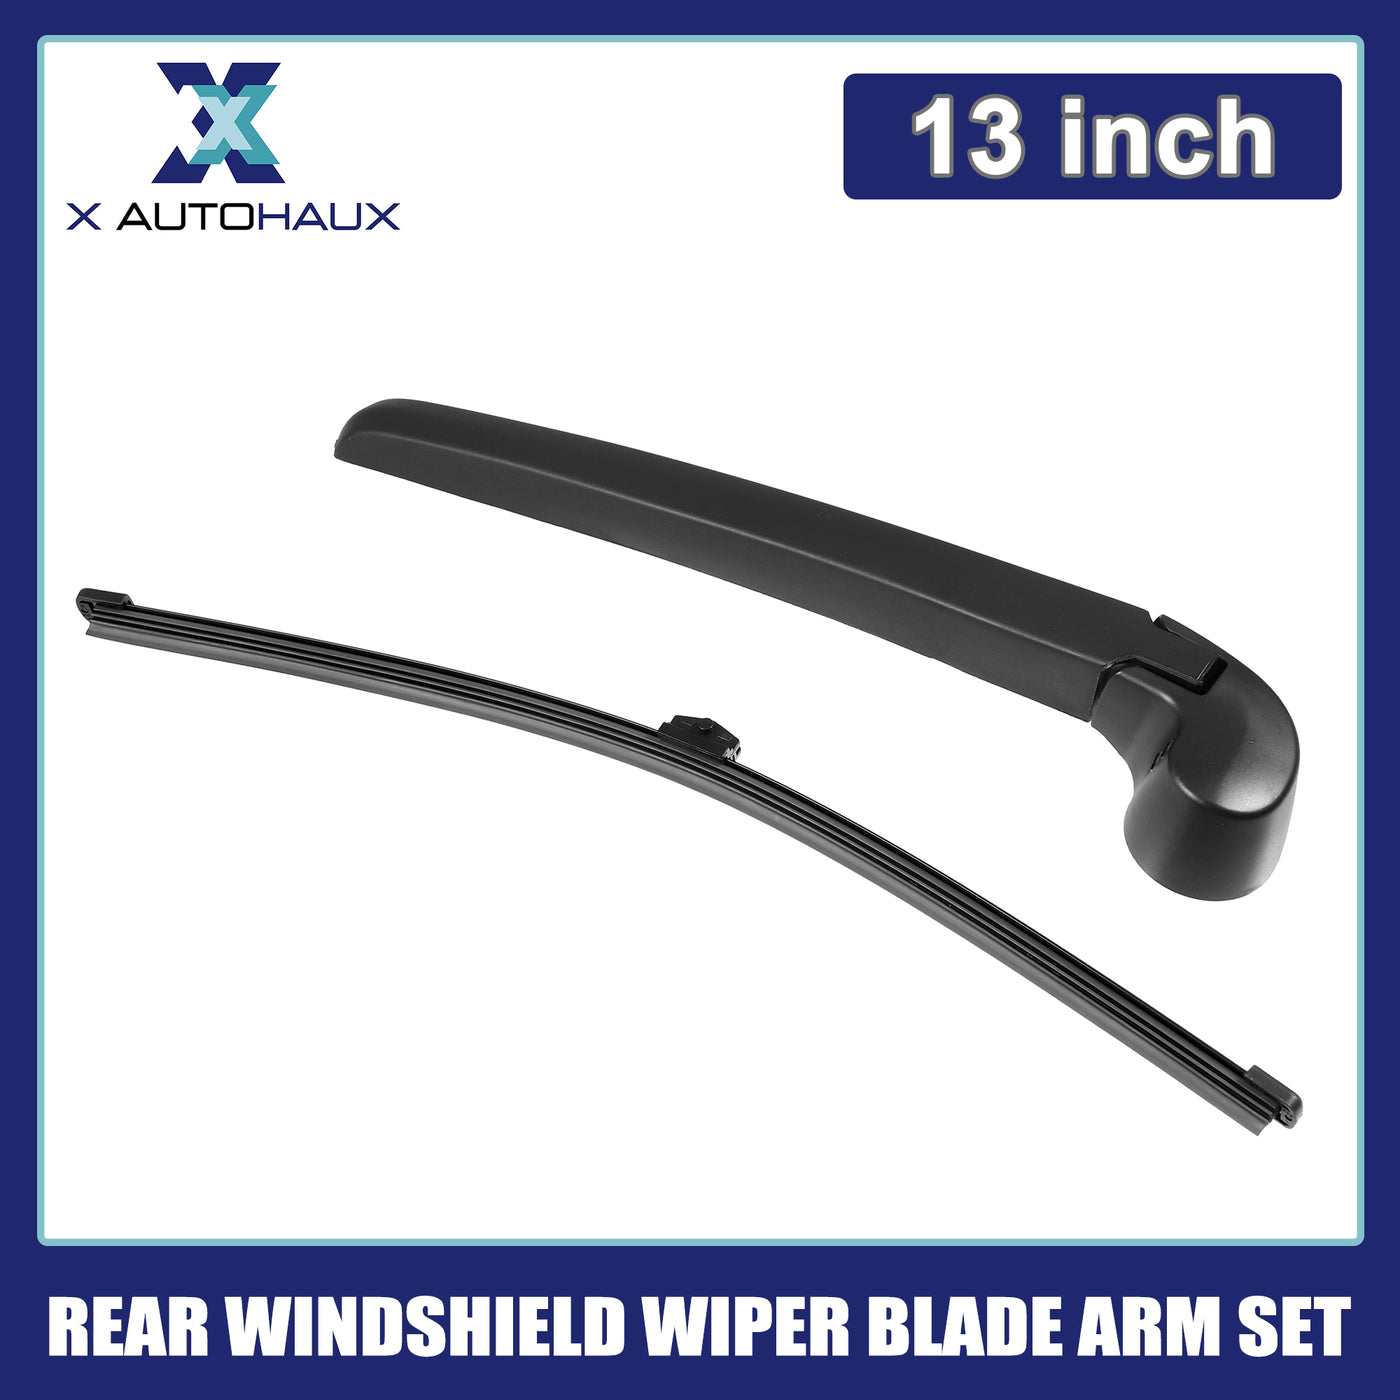 X AUTOHAUX 13inch Rear Windshield Wiper Blade Arm Set for Audi Q5 2008 2009 2010 2011 2012 2013 2014 2015 2016 2017